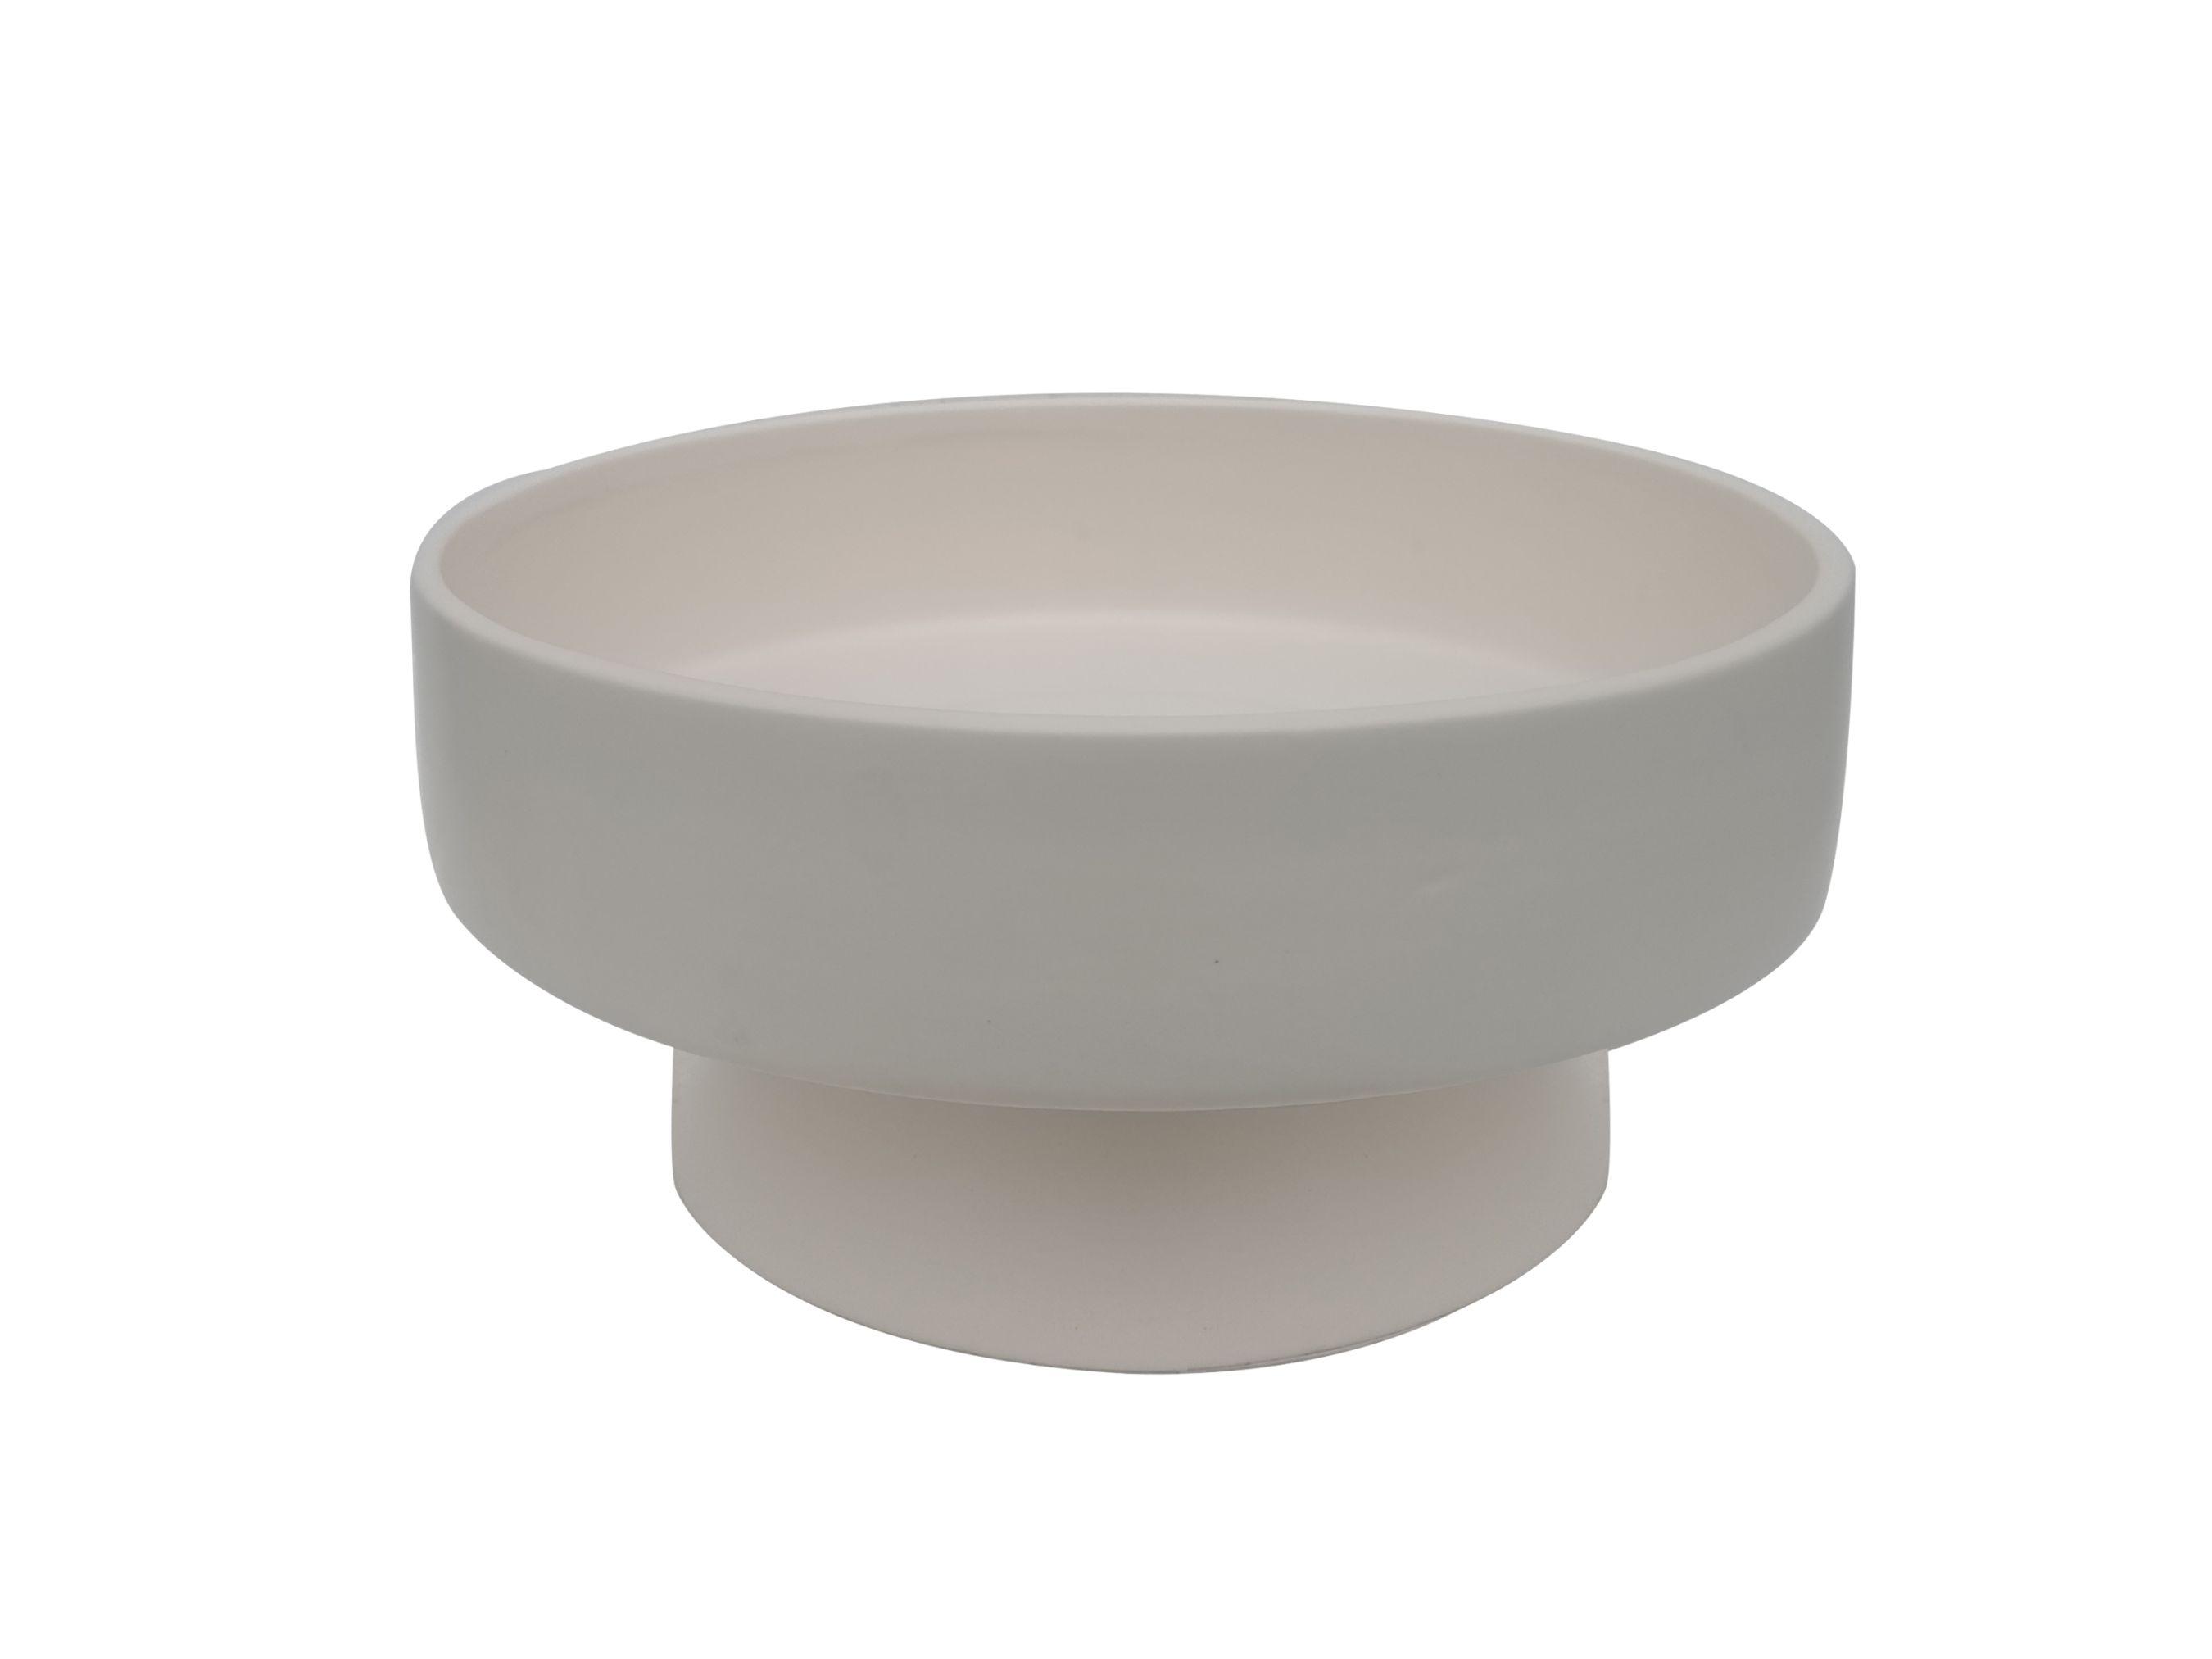 Dekoschale Bowl aus Keramik - Weiß, MODERN, Keramik (24,5/12cm) - Modern Living